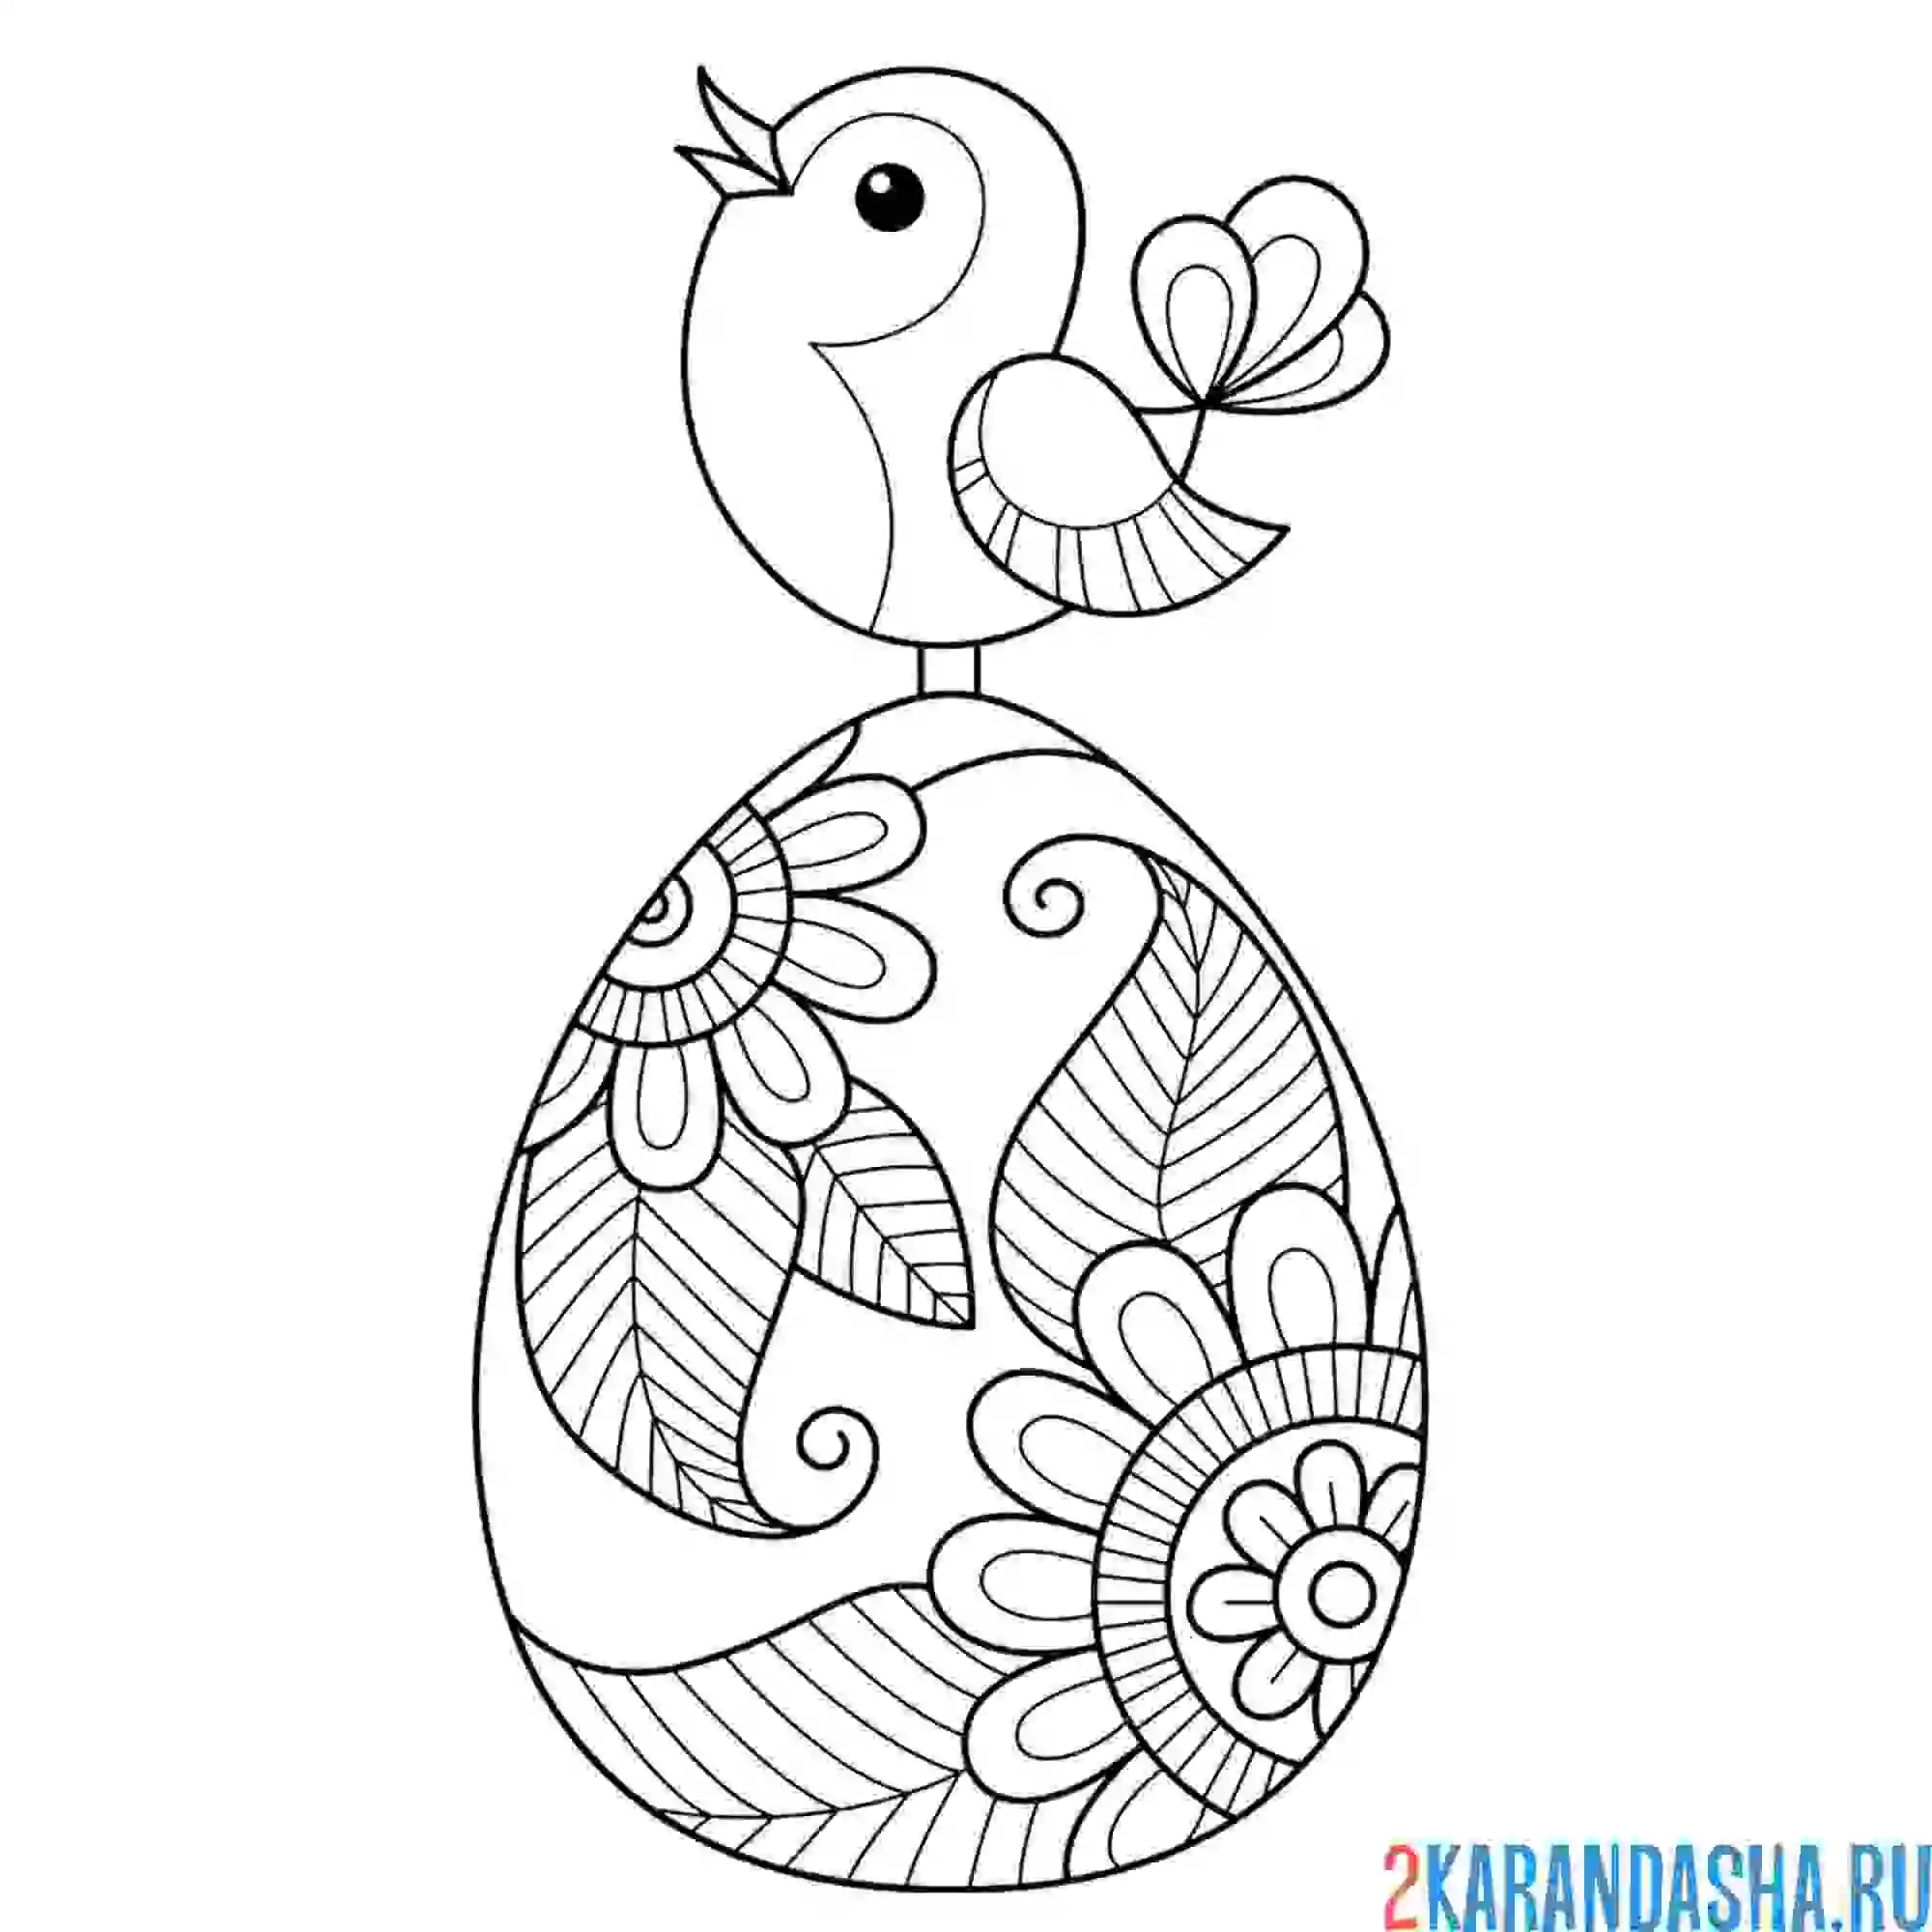 Раскраска милая весенняя птичка и яйцо